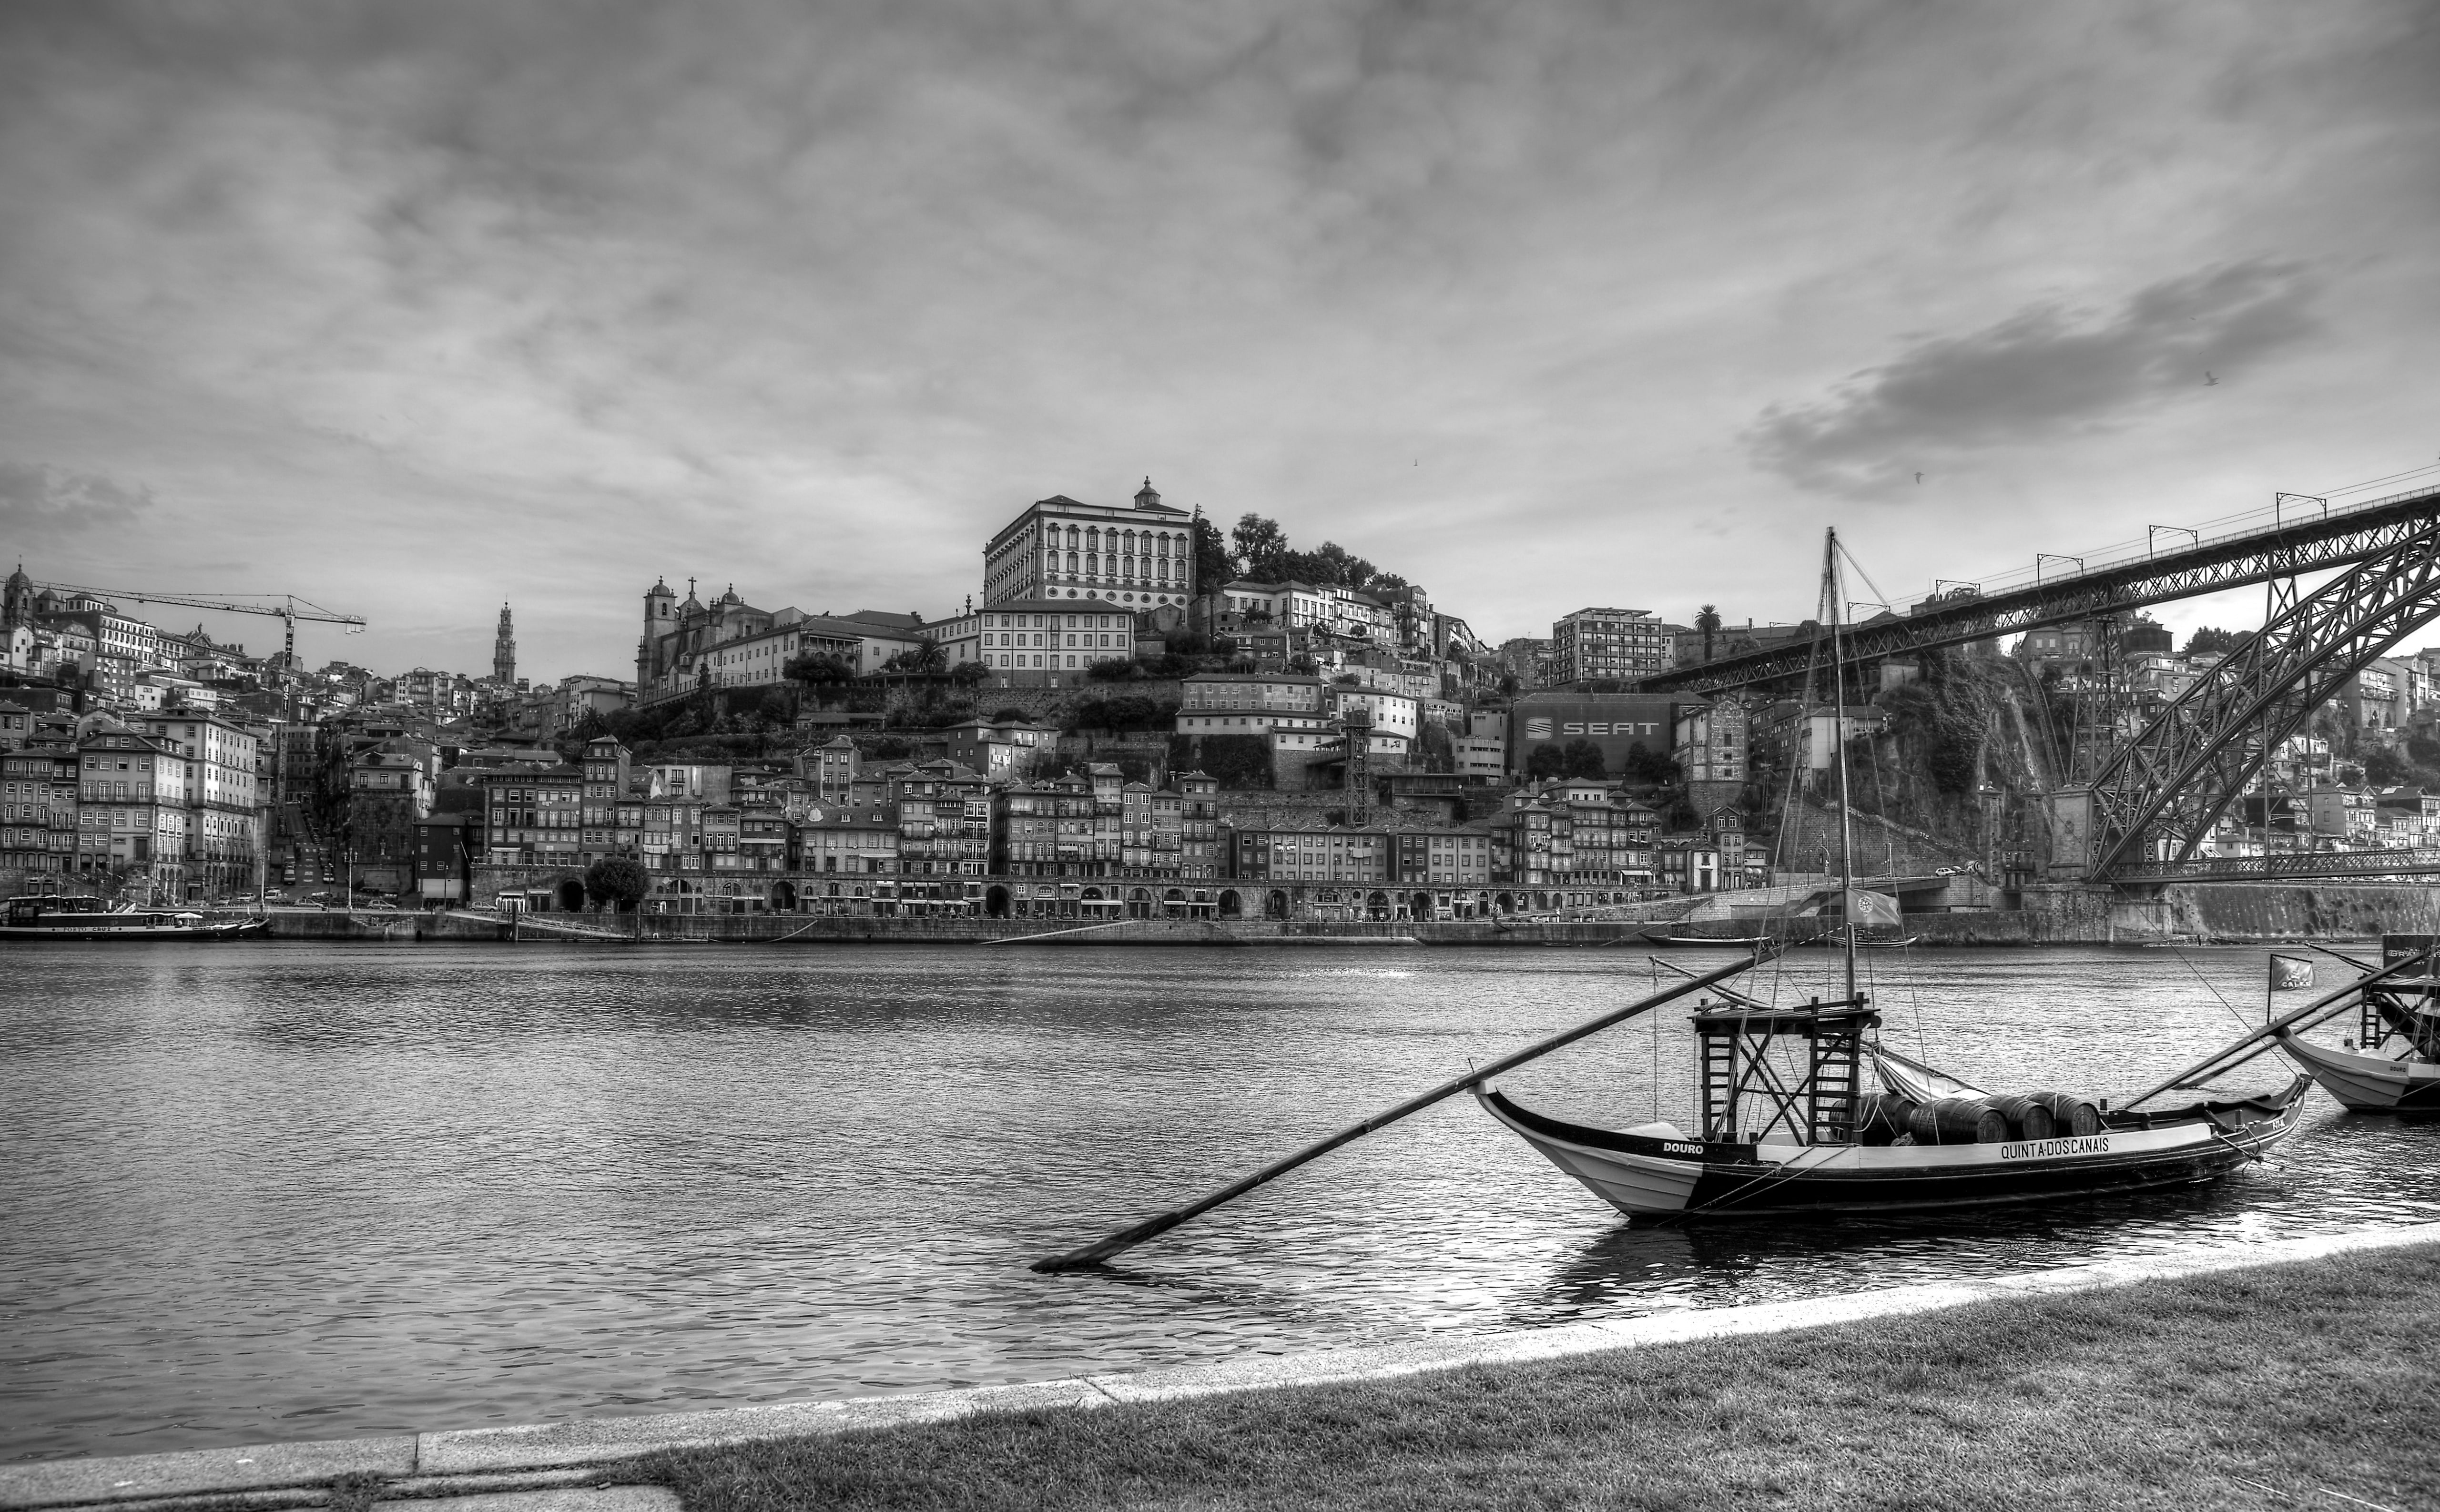 Cidade Invicta, grayscale photo of boat near bridge and village across body of water